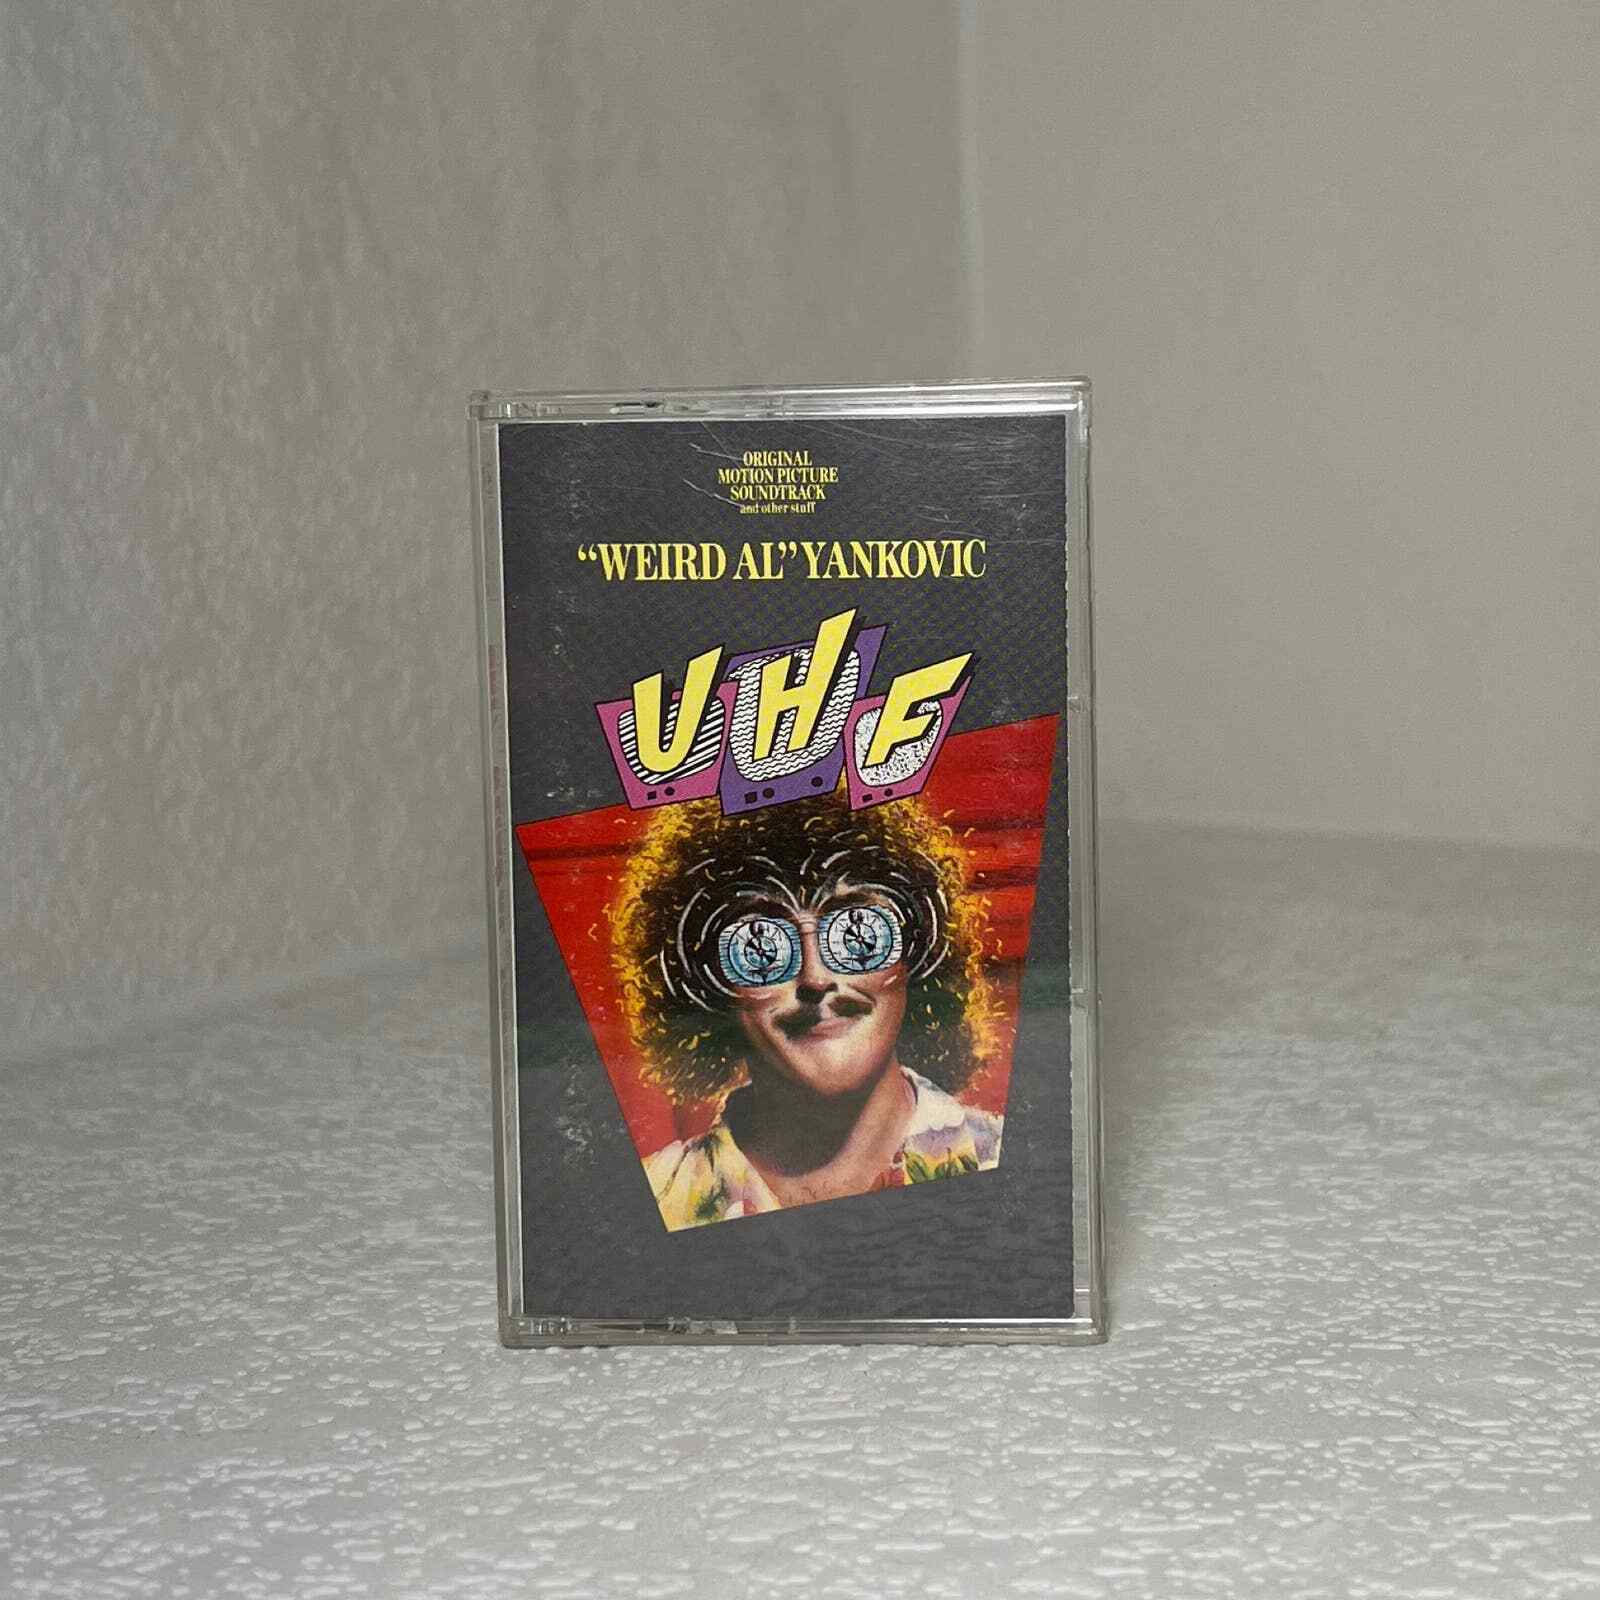 VINTAGE Weird “Al” Yankovic UHF cassette tape 